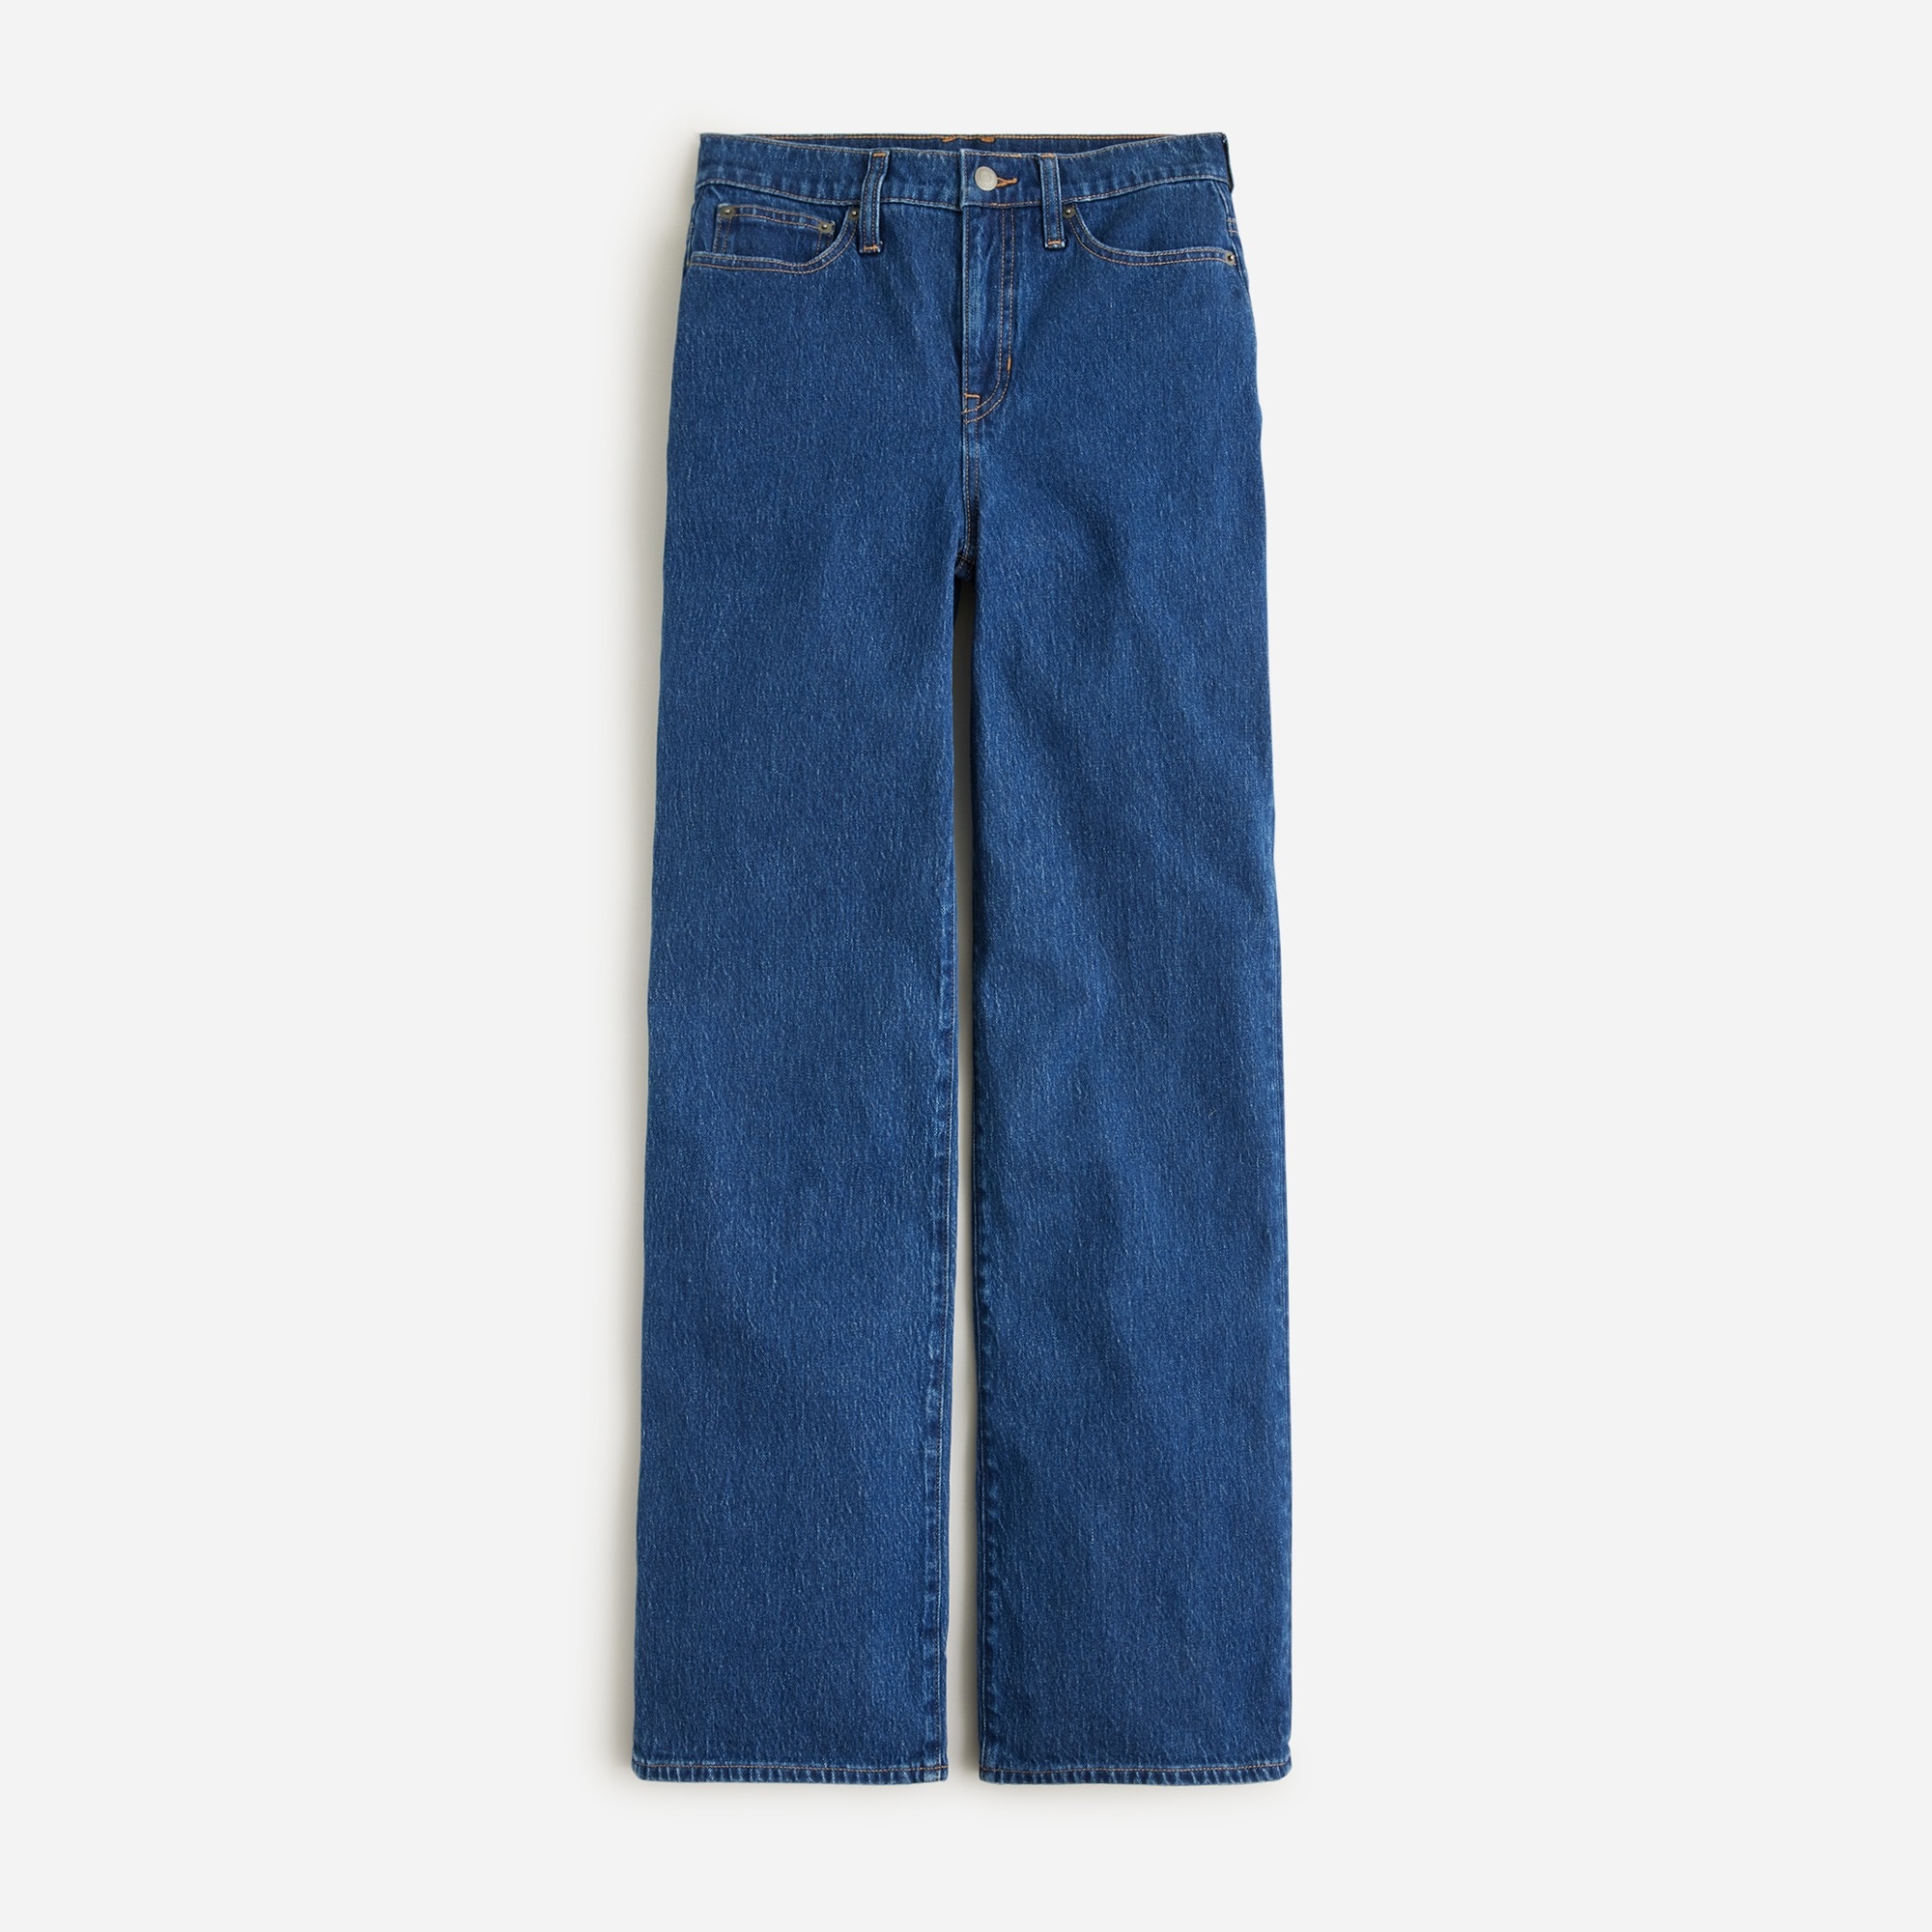  Full-length slim wide-leg jean in Brick Lane wash